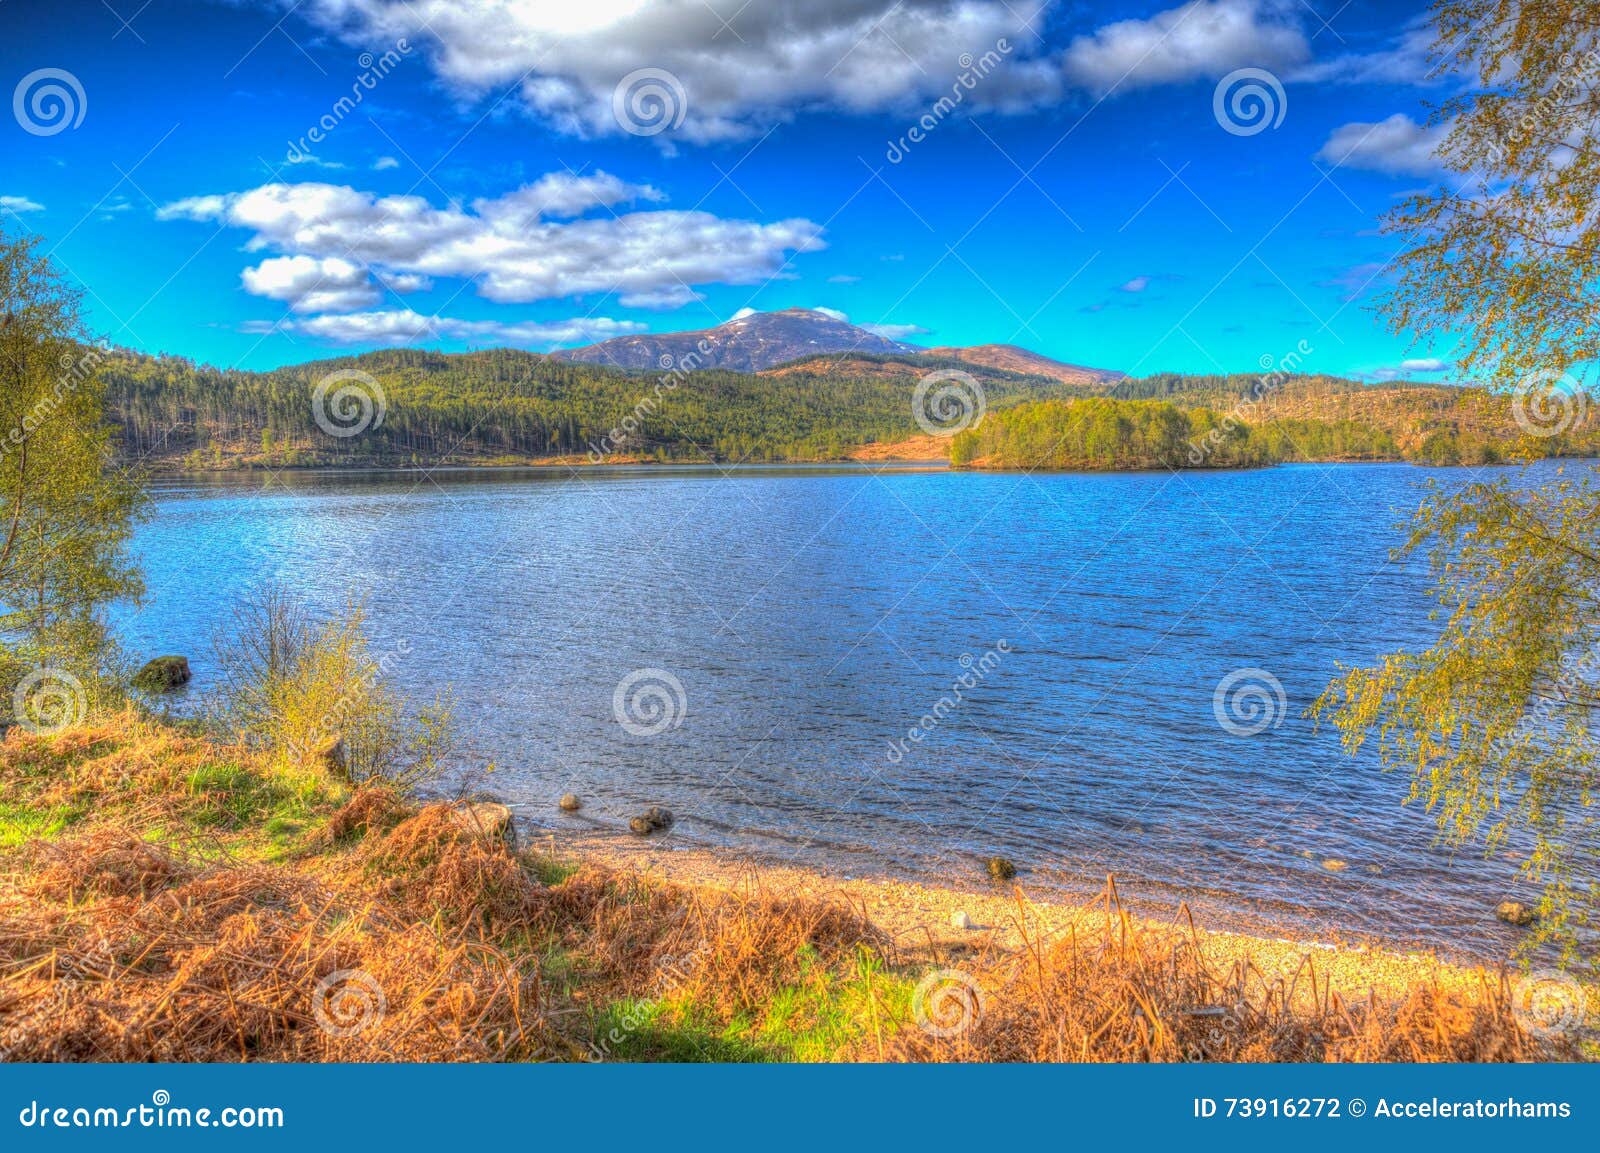 Scottish Loch Garry Scotland UK Lake West of Invergarry on the A87 ...